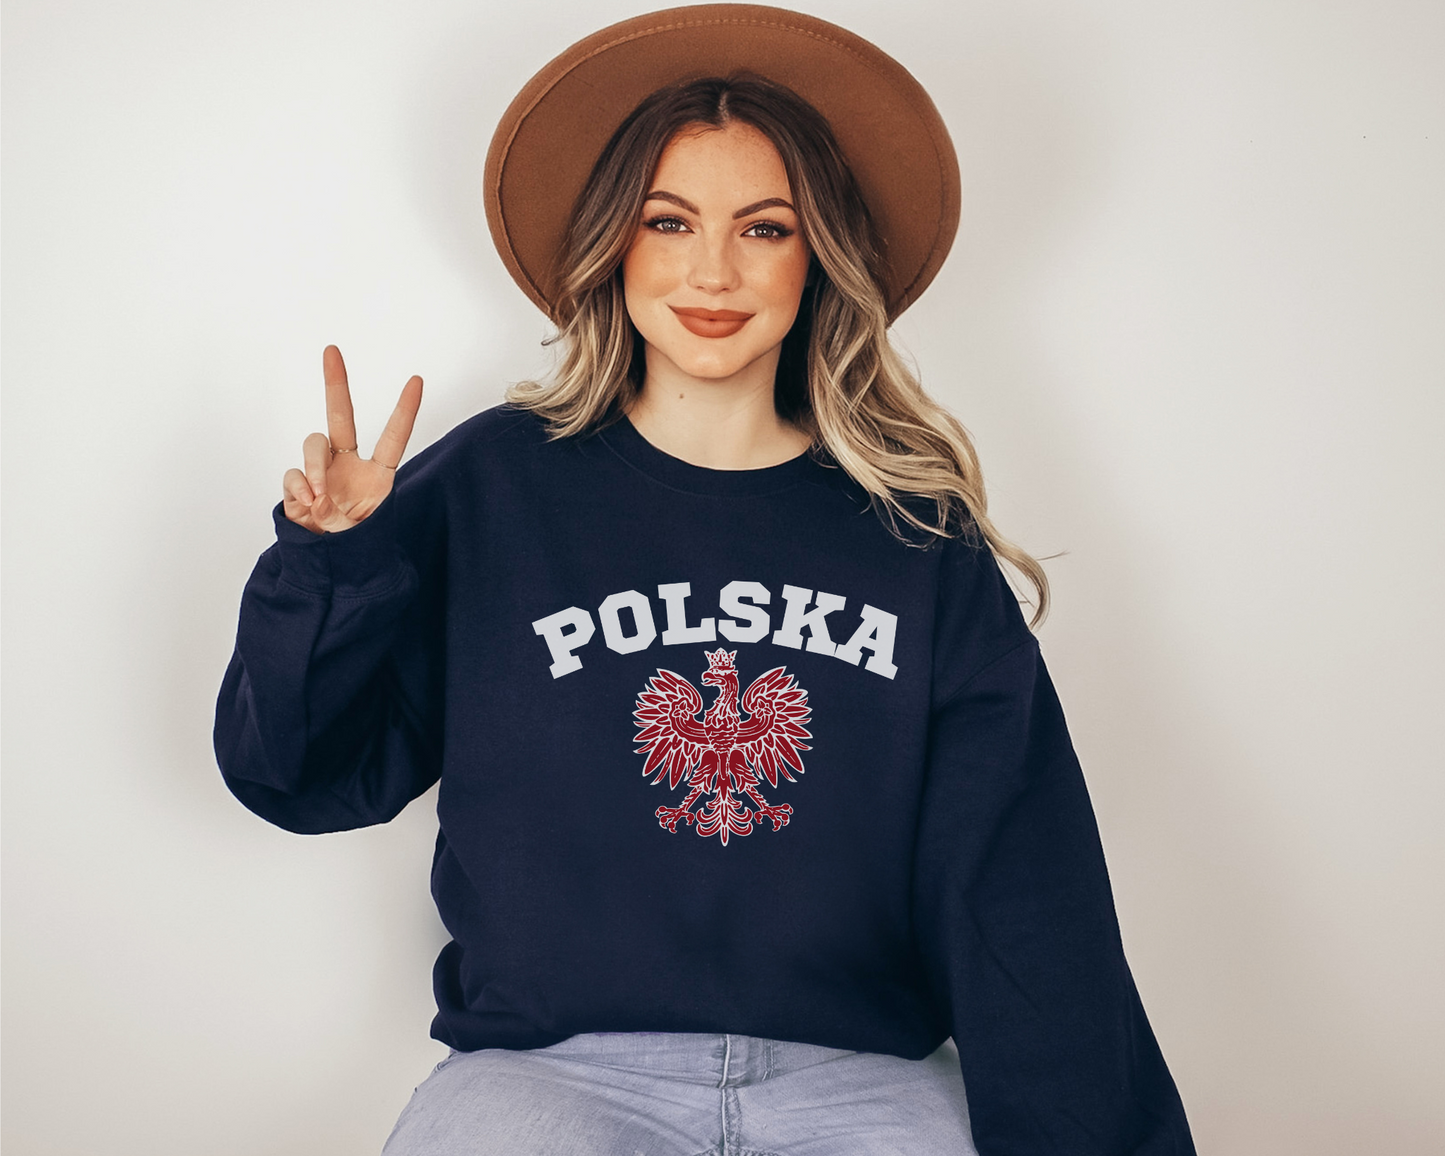 Polska Polish Sweatshirt in Navy